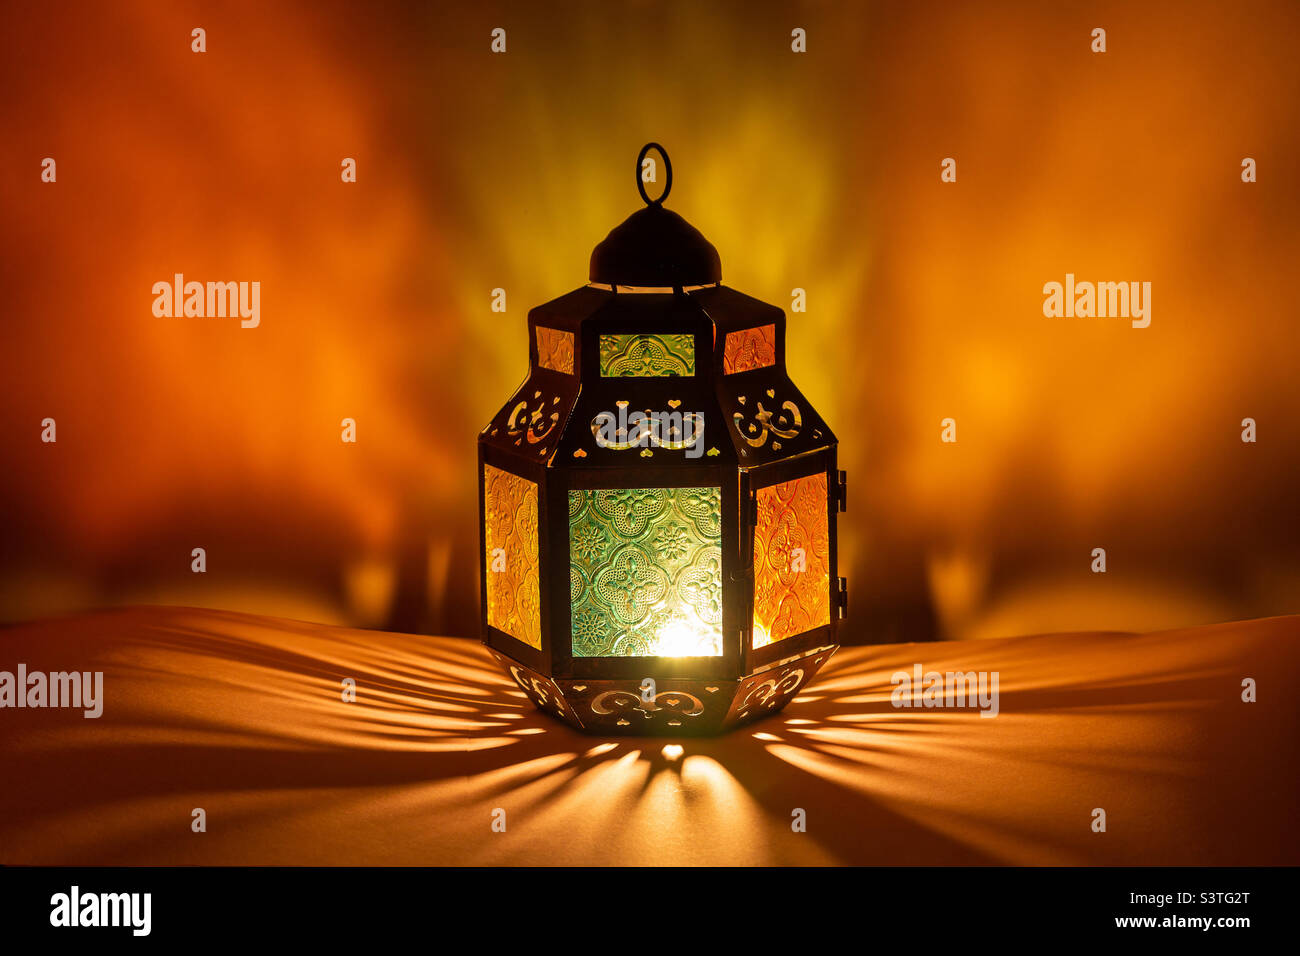 Lit up lantern in the evening. Ramadan Kareem and Eid Mubarak. Stock Photo